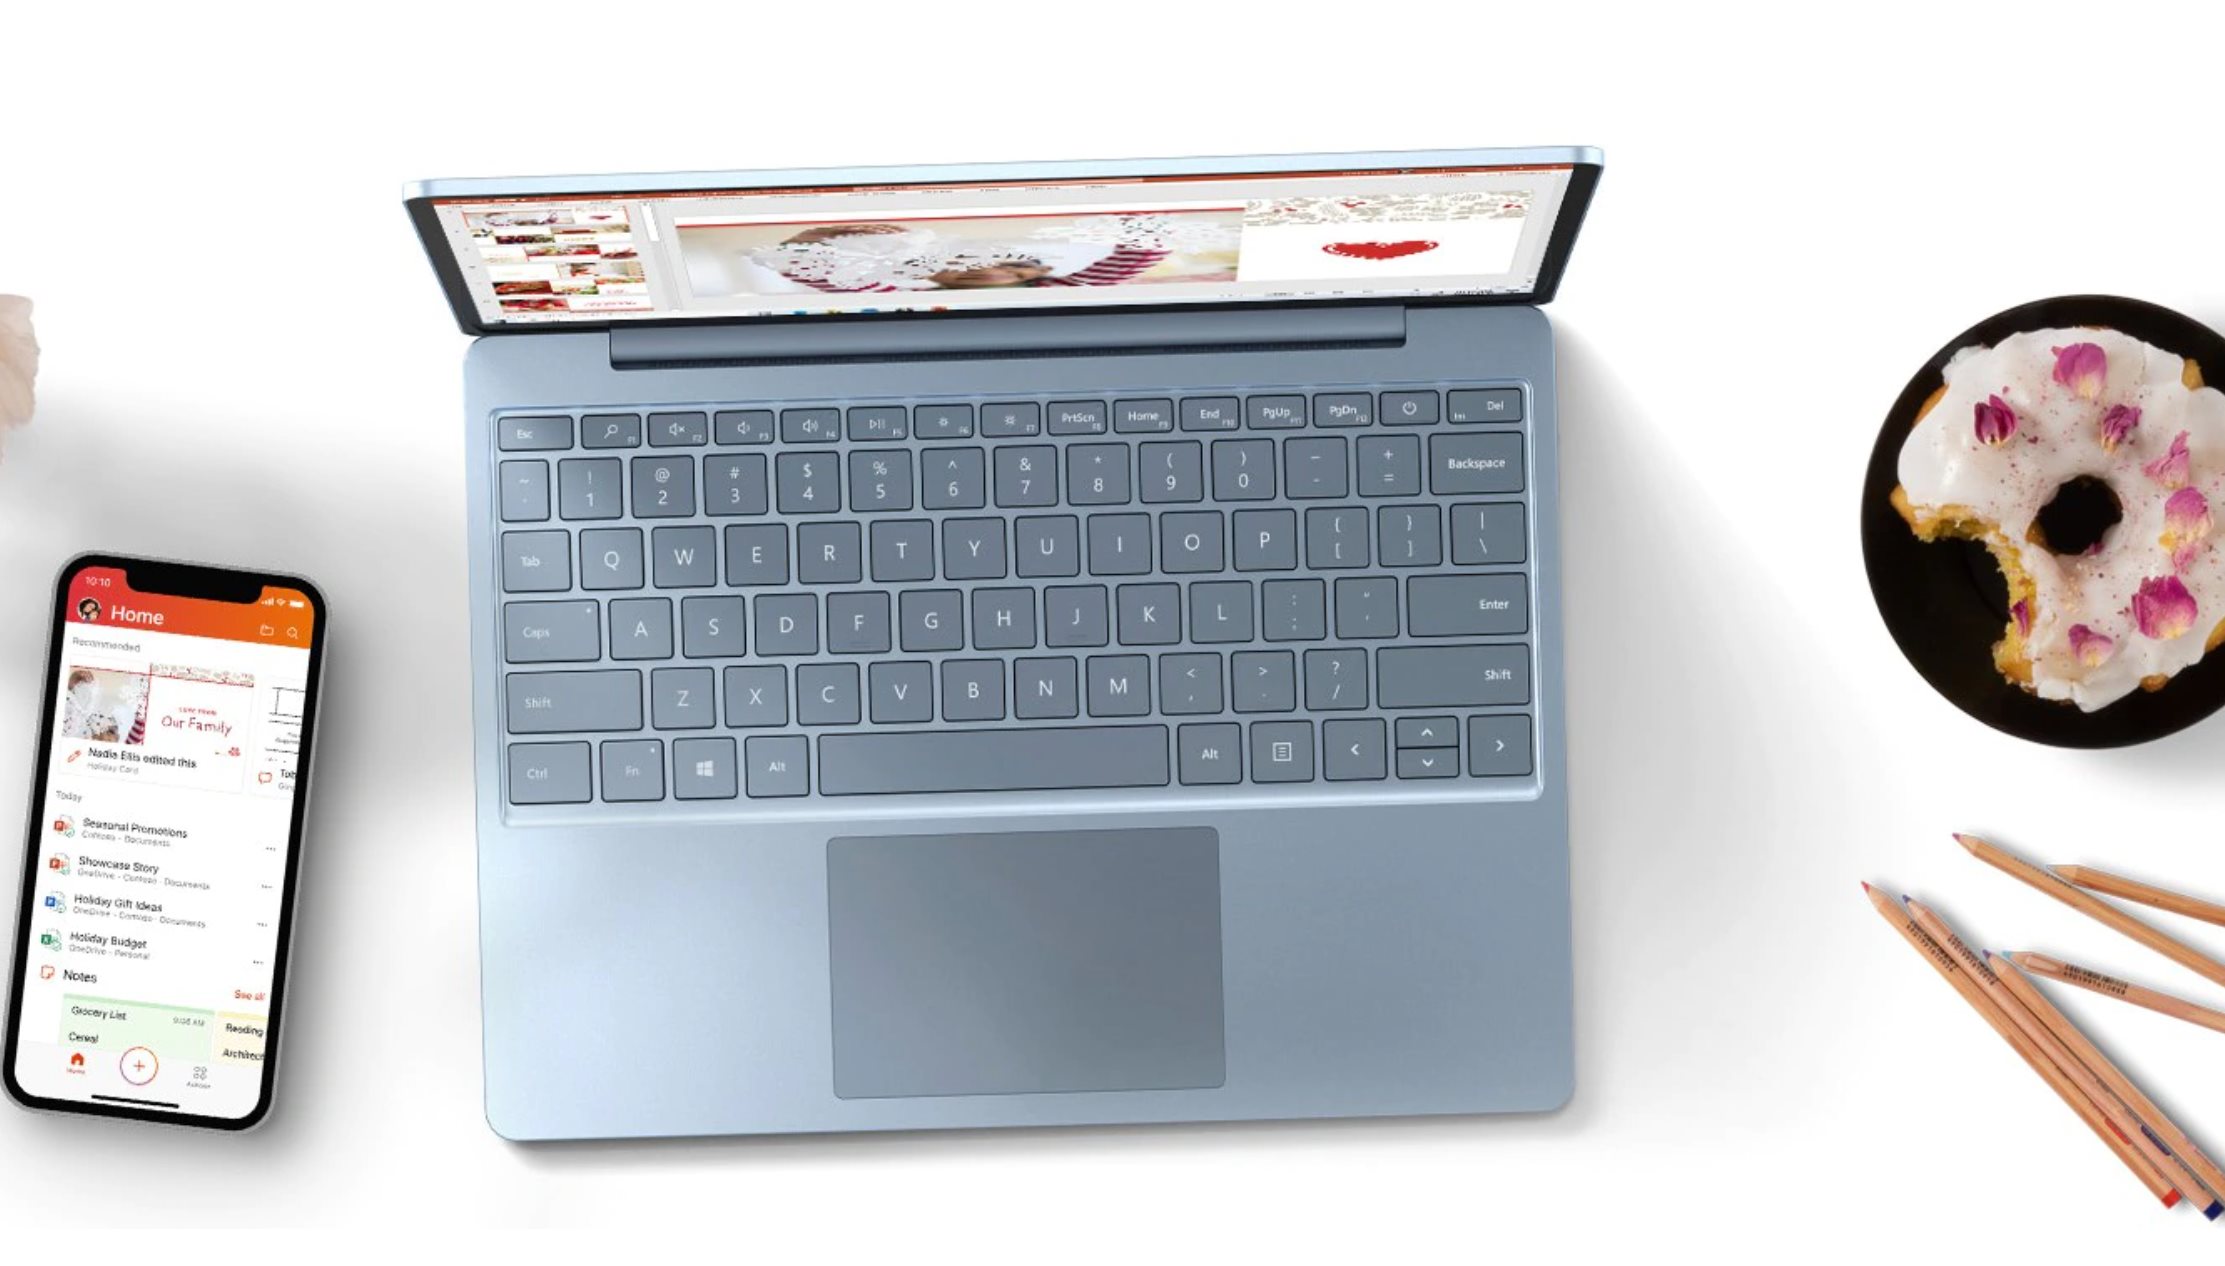 microsoft surface laptop go specs